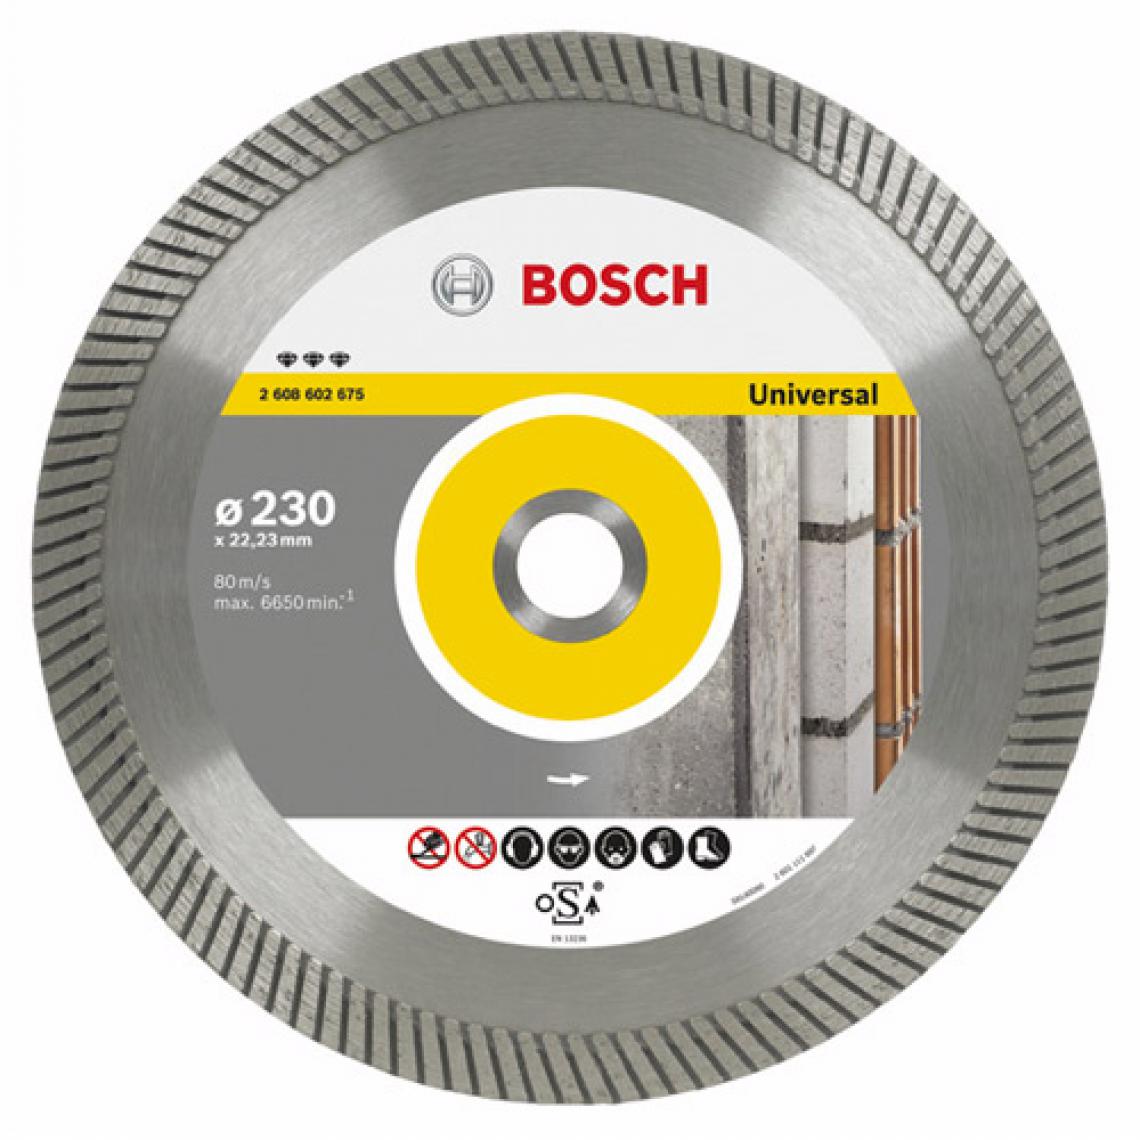 Bosch - Best for Universal Turbo 150mm - Accessoires ponçage